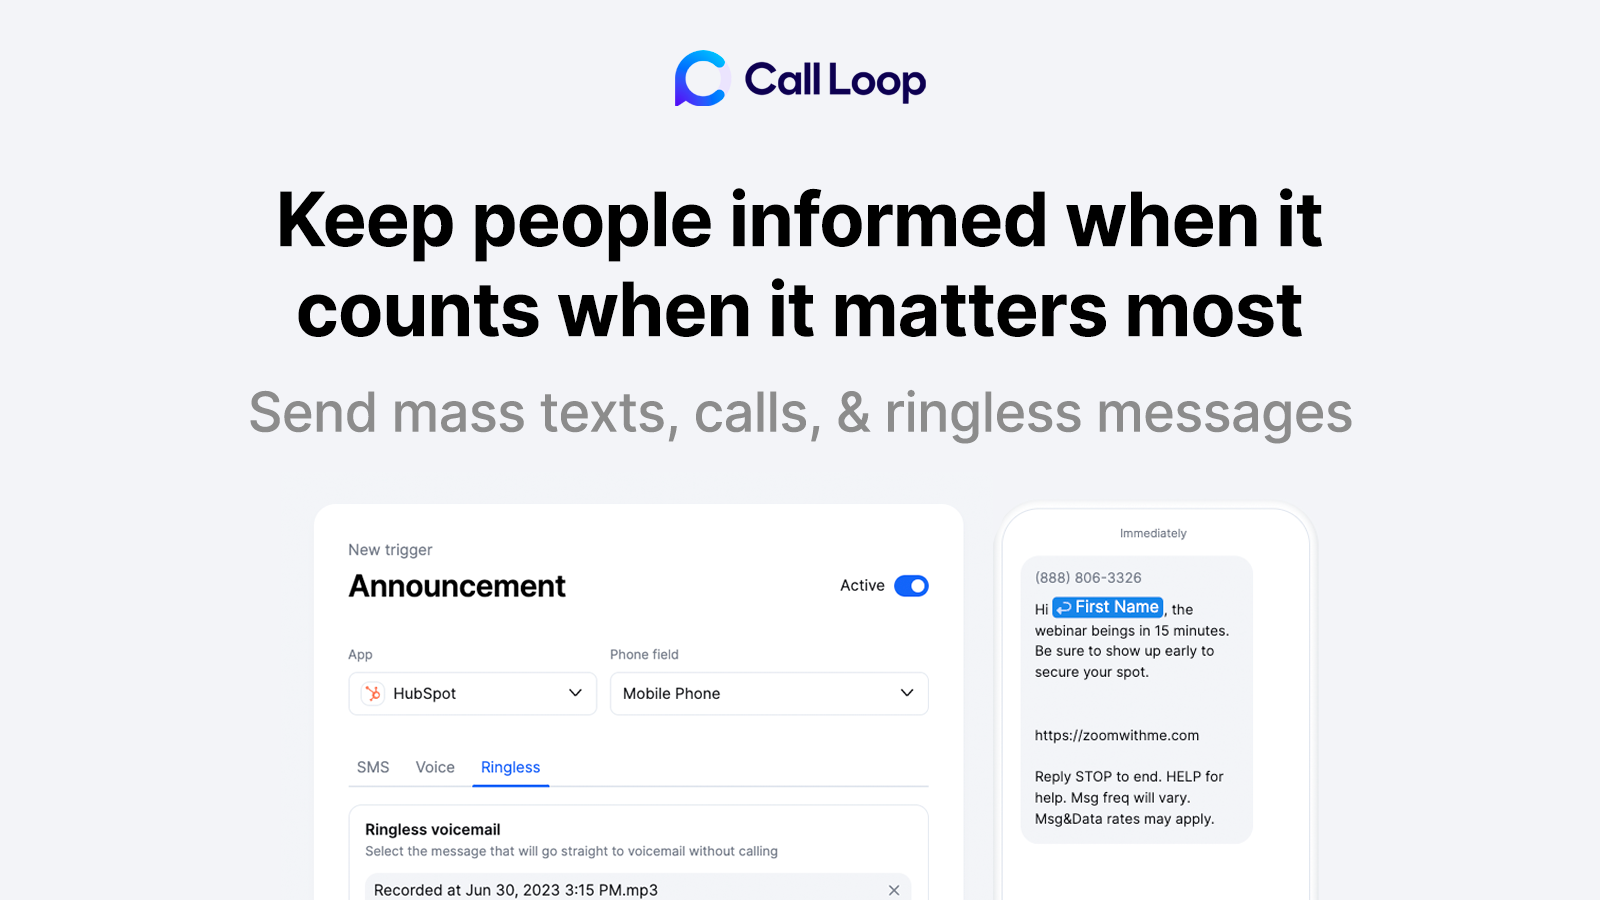 Call Loop